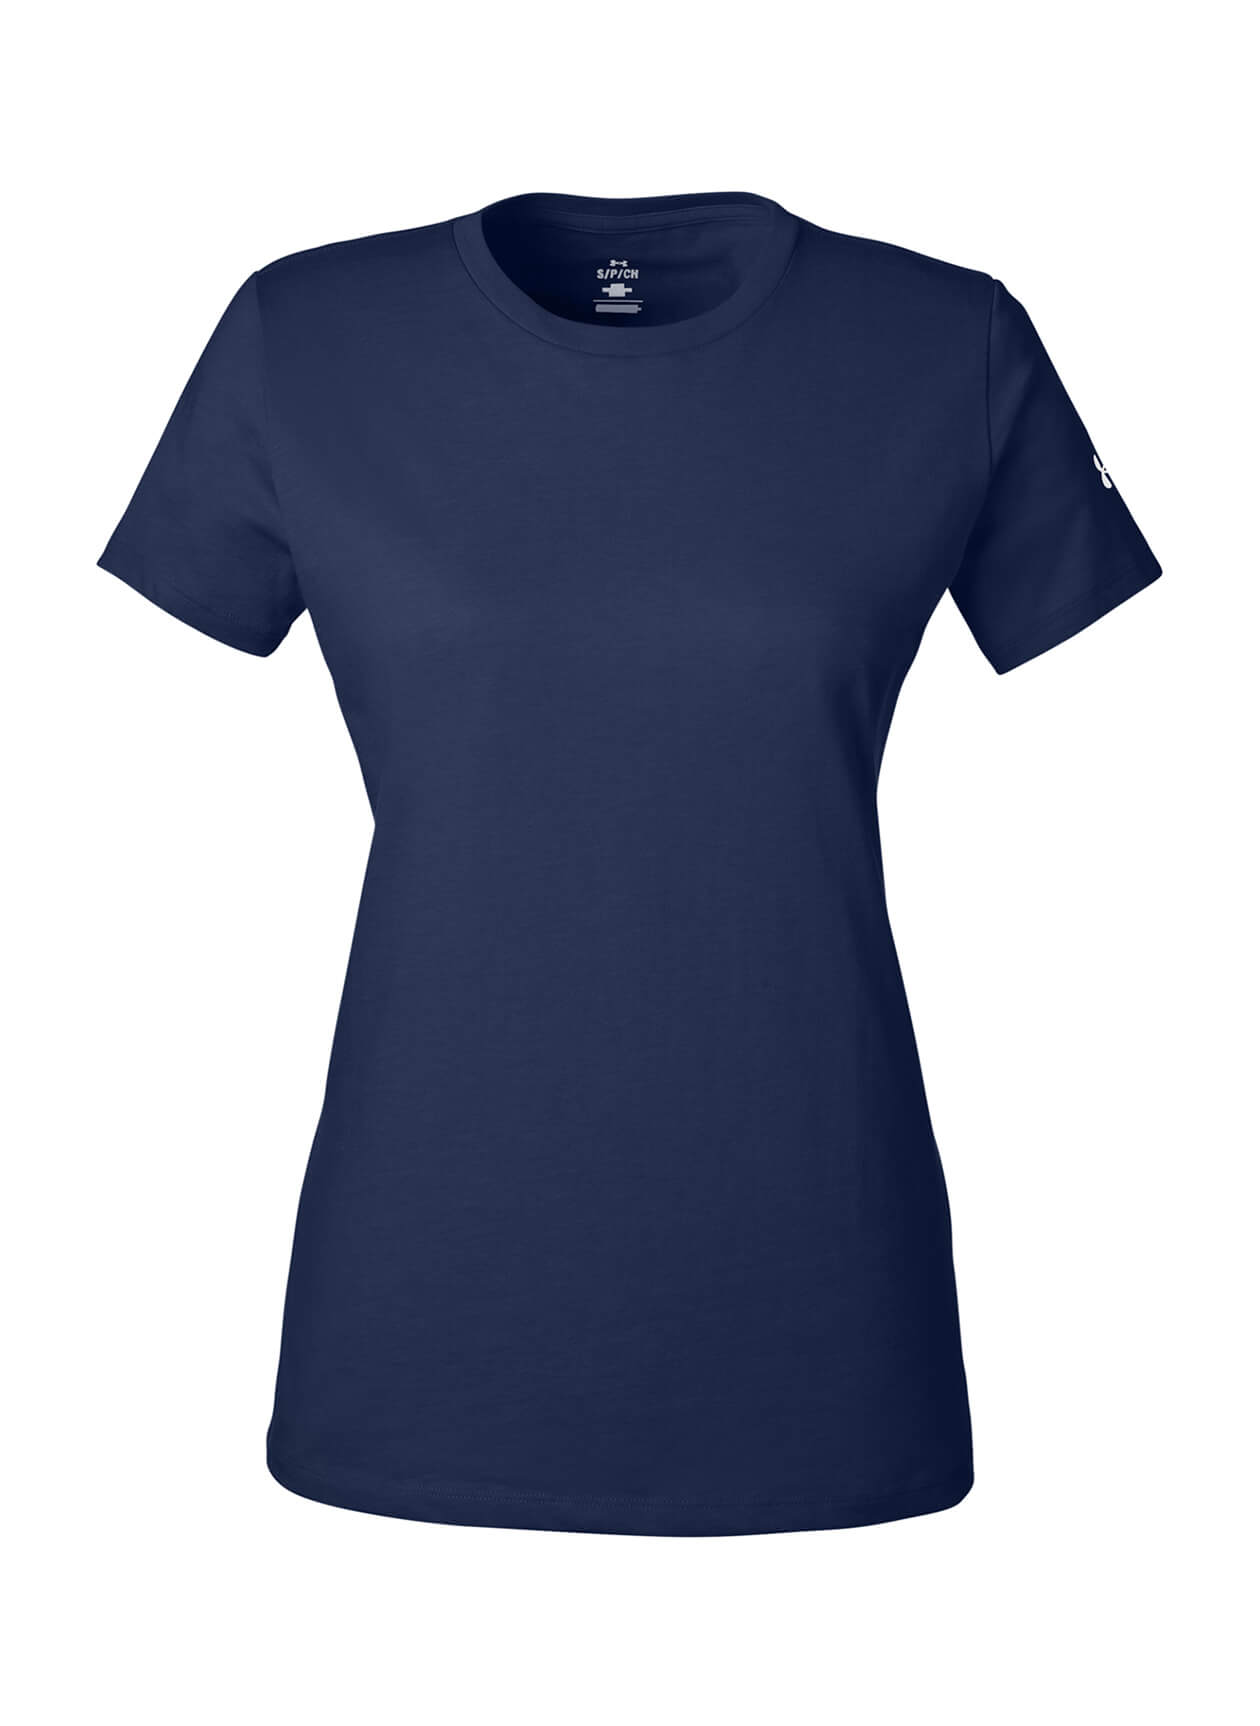 Under Armour Women's Midnight Navy Athletic 2.0 Raglan T-Shirt